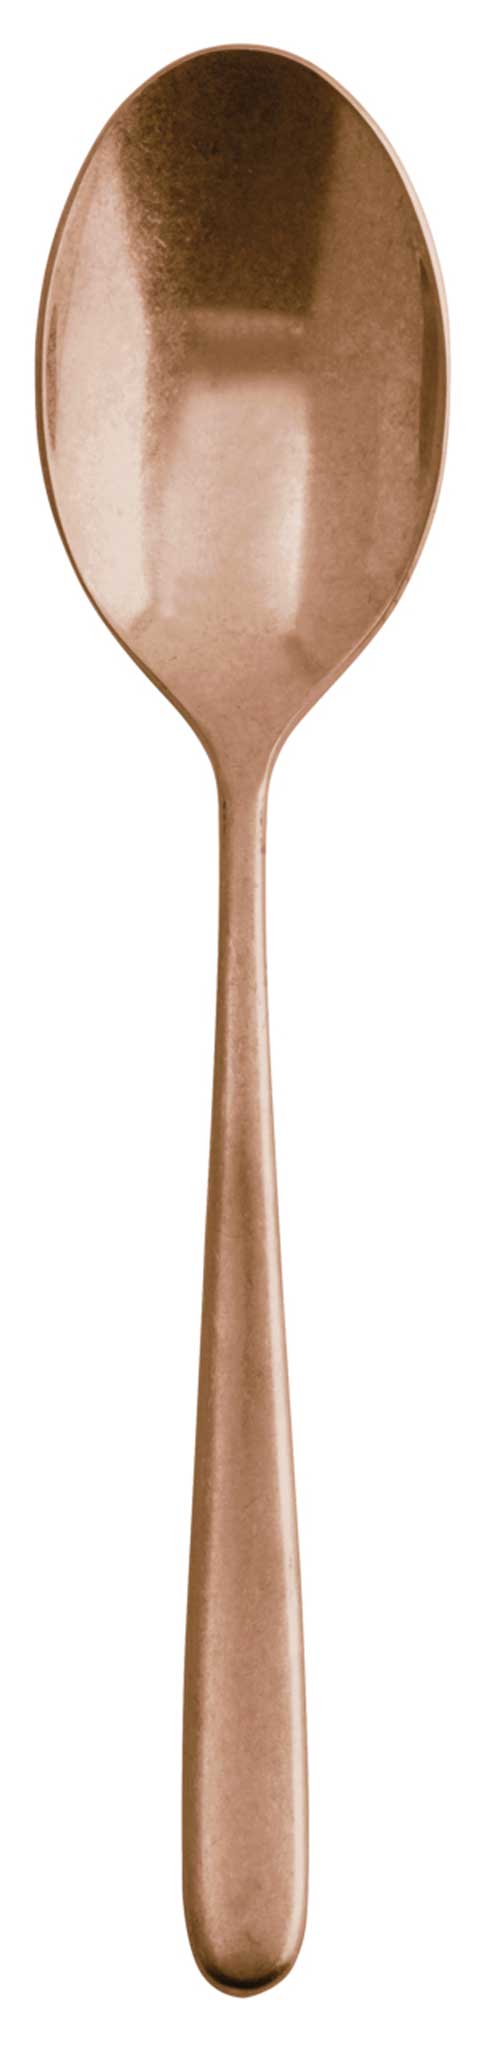 $57.00 Copper Vintage - Serving Spoon 18/10 s/s - PVD Copper